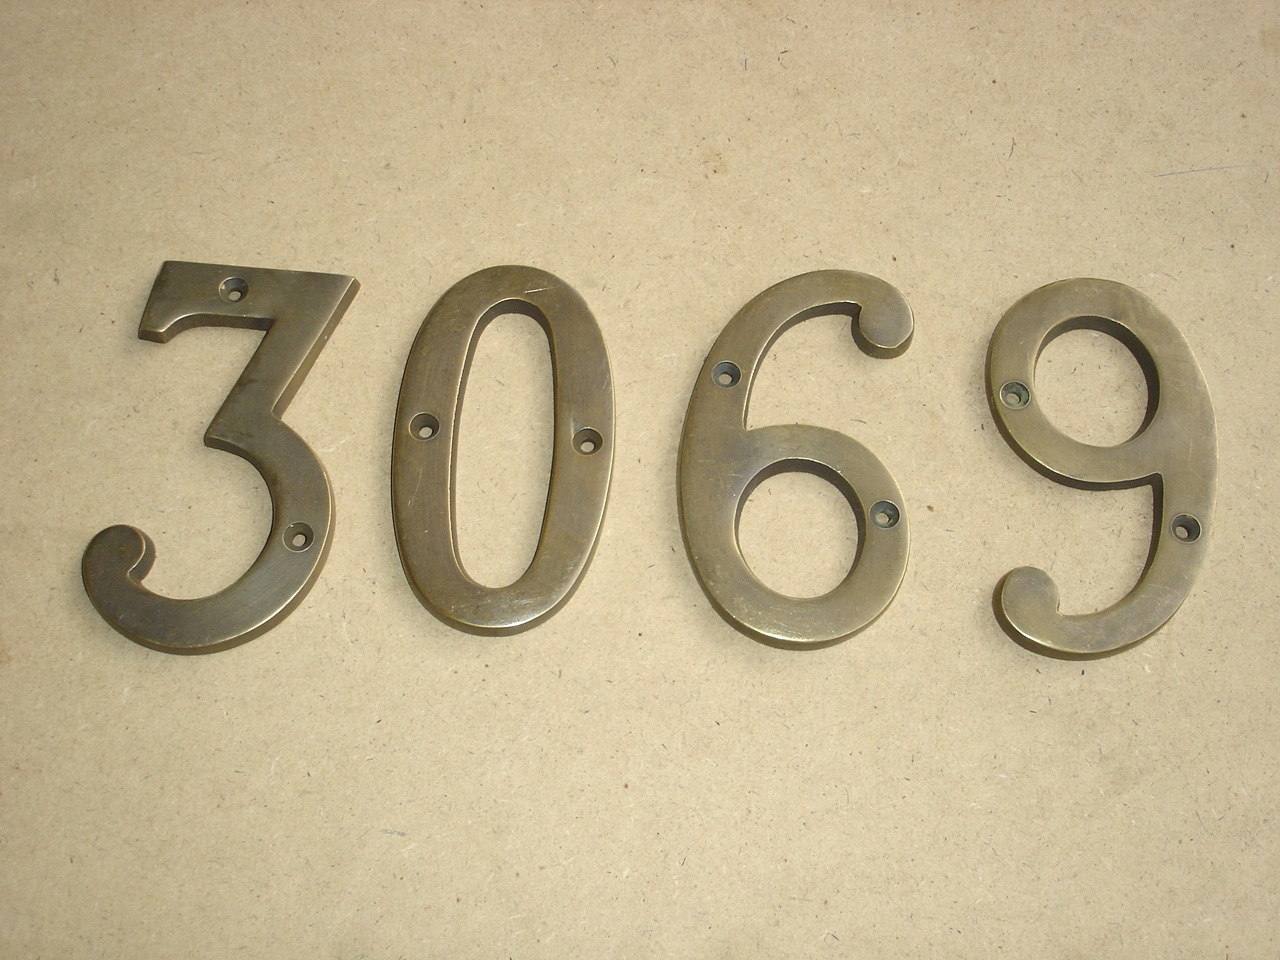 Brass letter size high 10 cm.